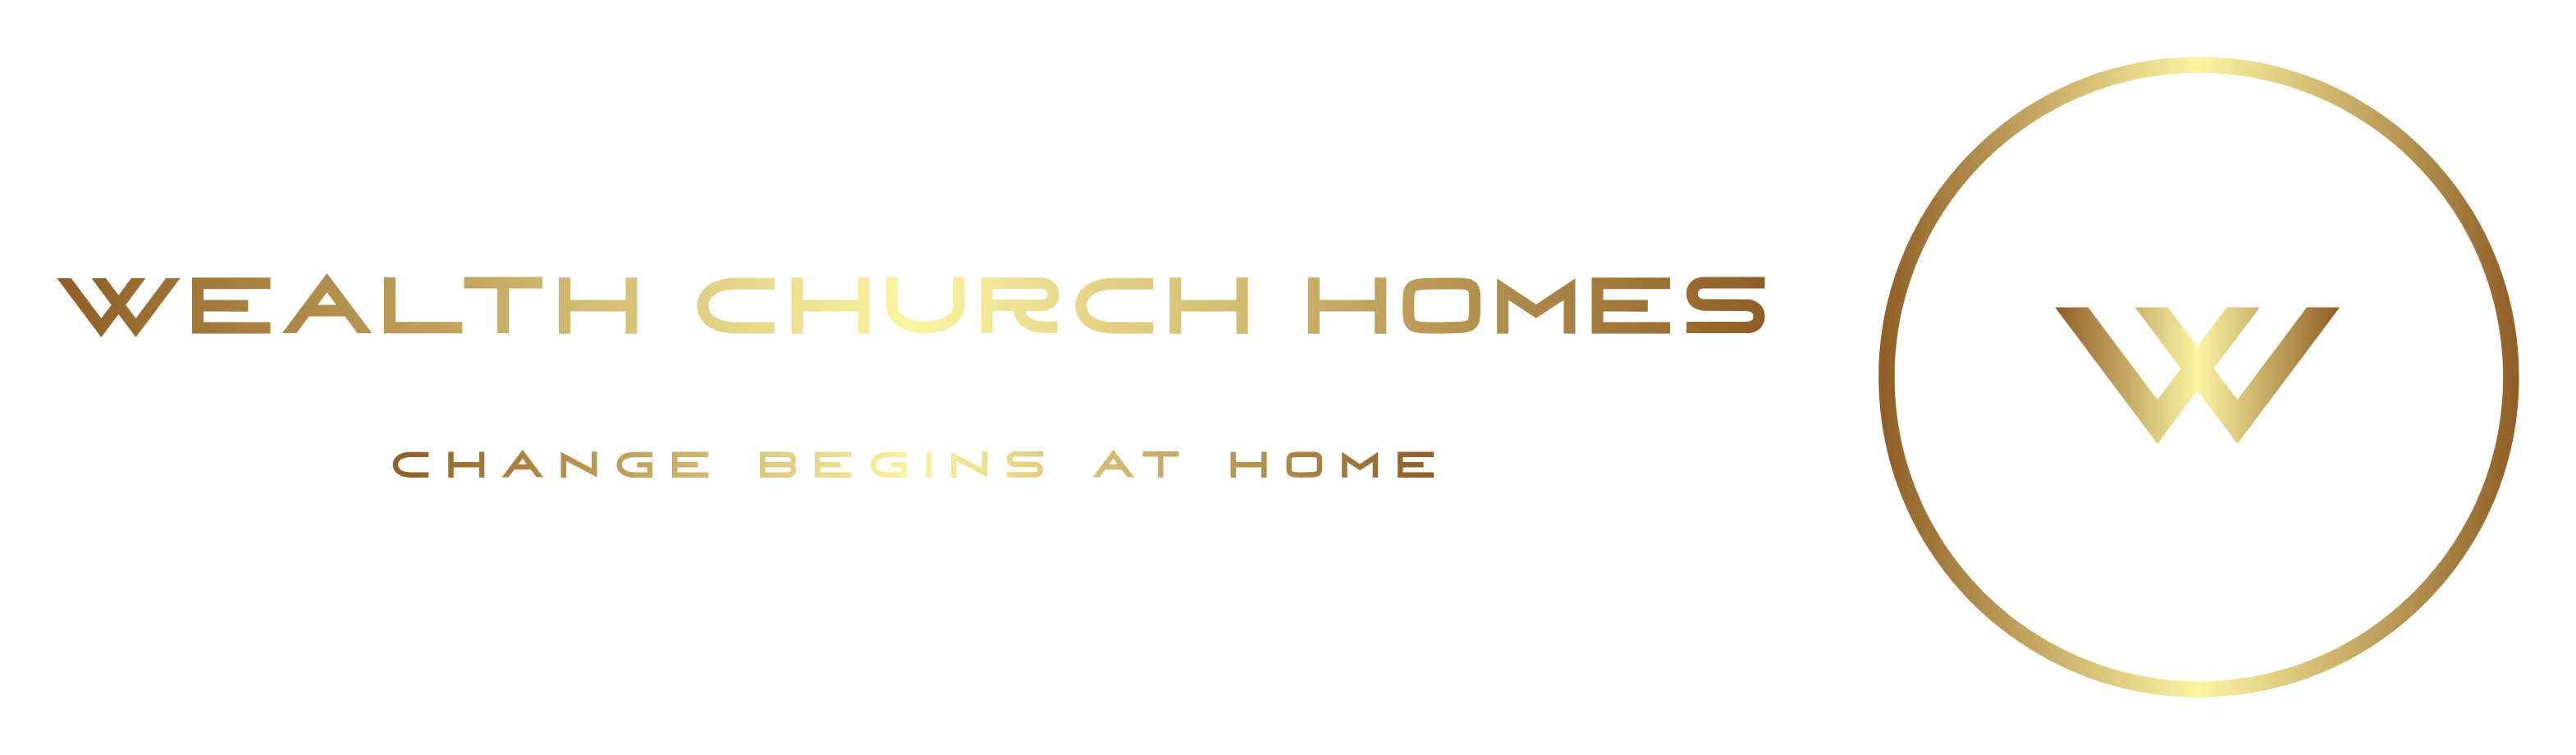 Wealth Church Homes Ltd LOGO